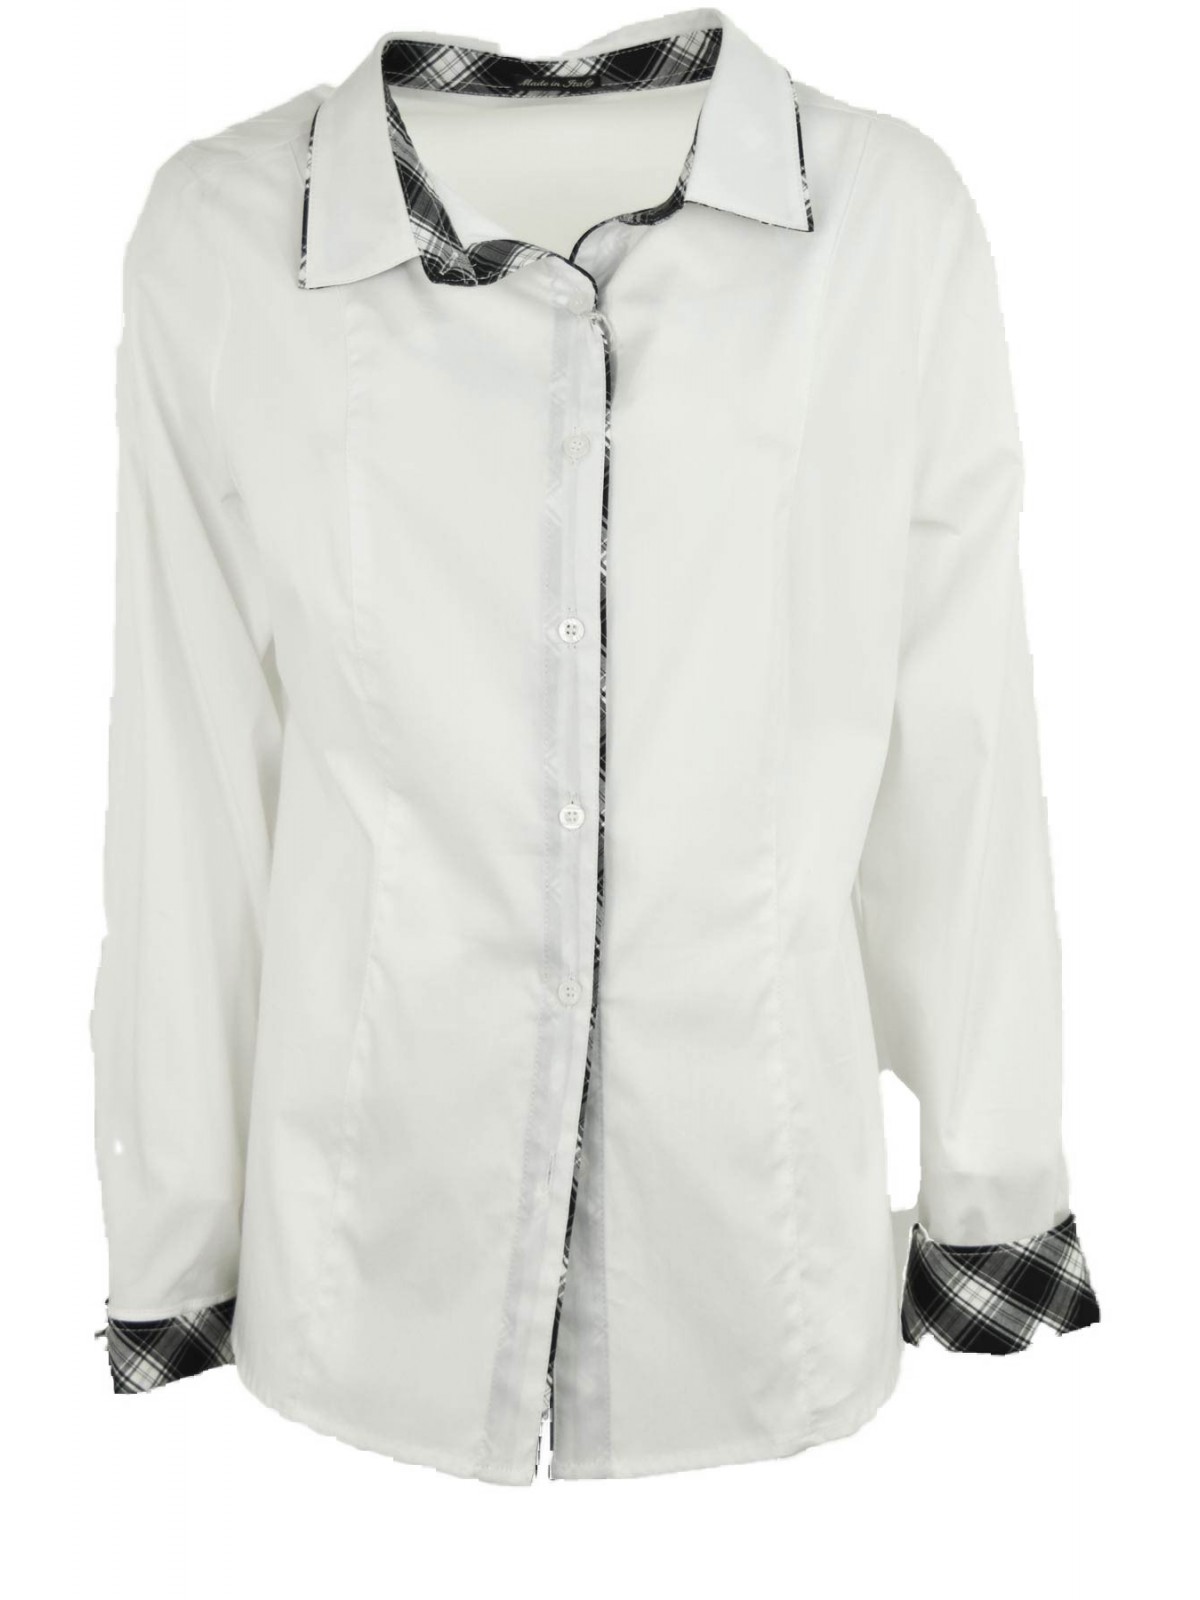 Camicia Donna Classica XXL Bianco Rifiniture Scozzese